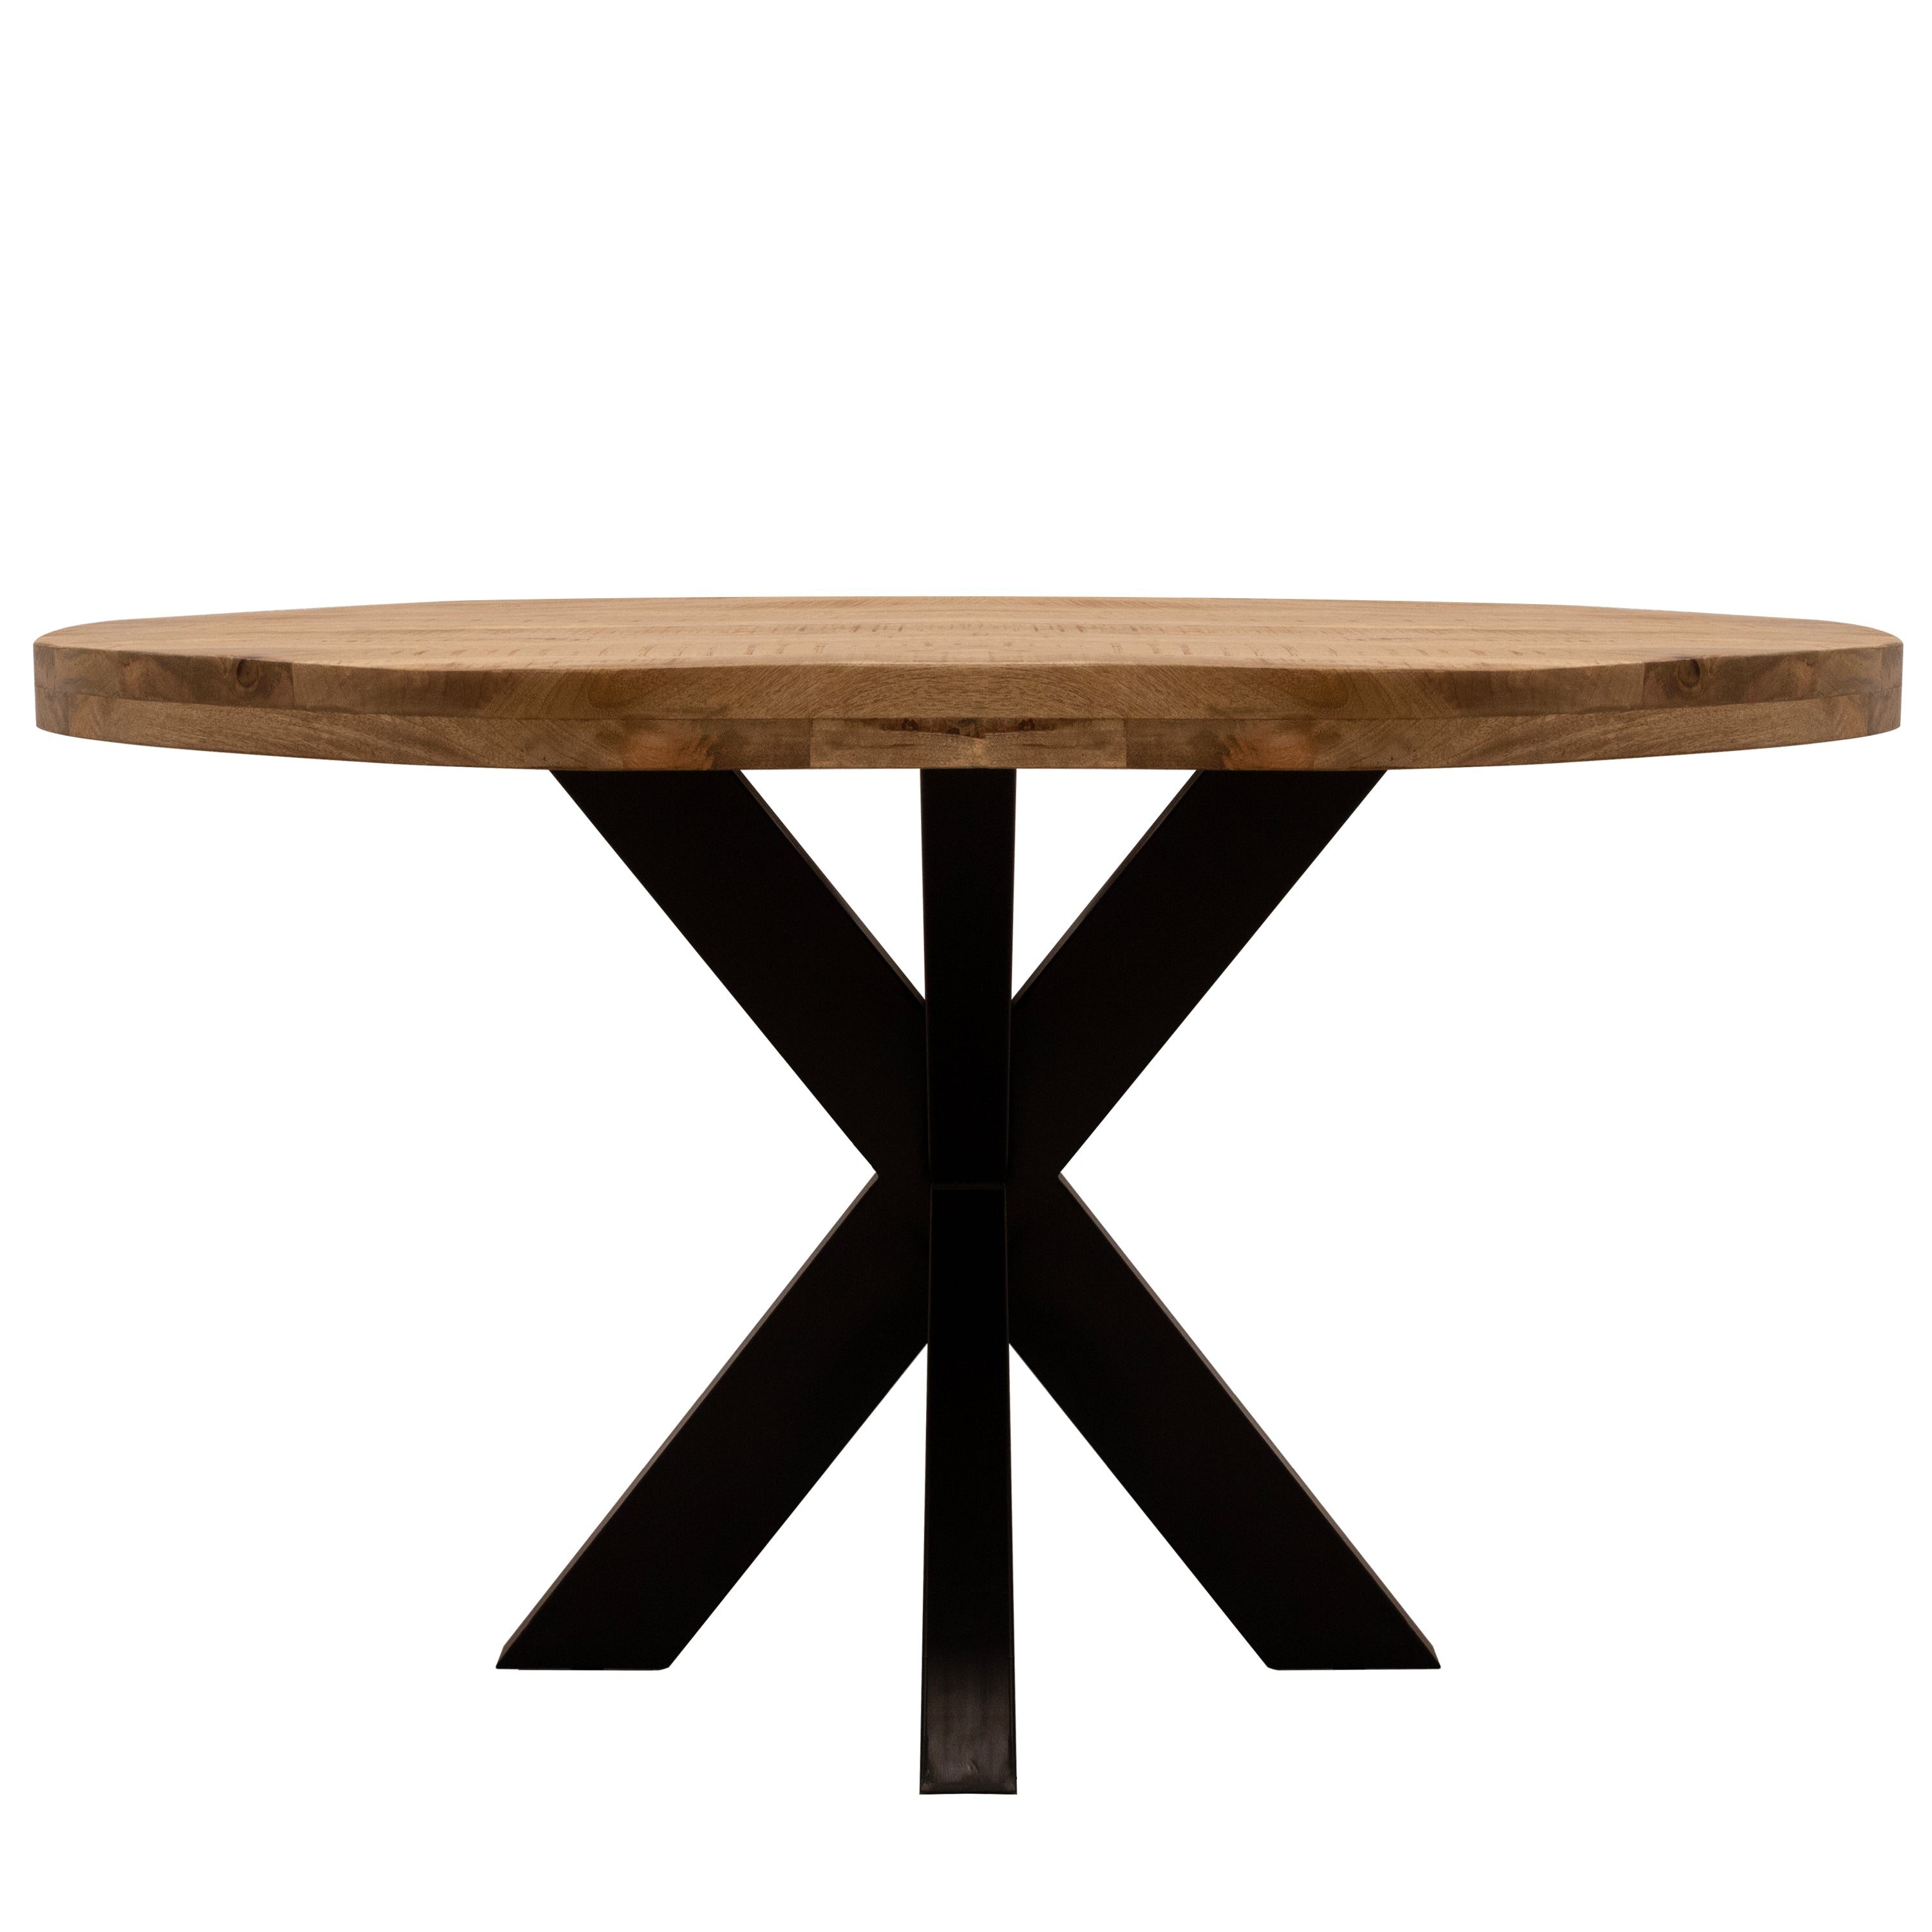 Kick dining table Dax round - 120cm